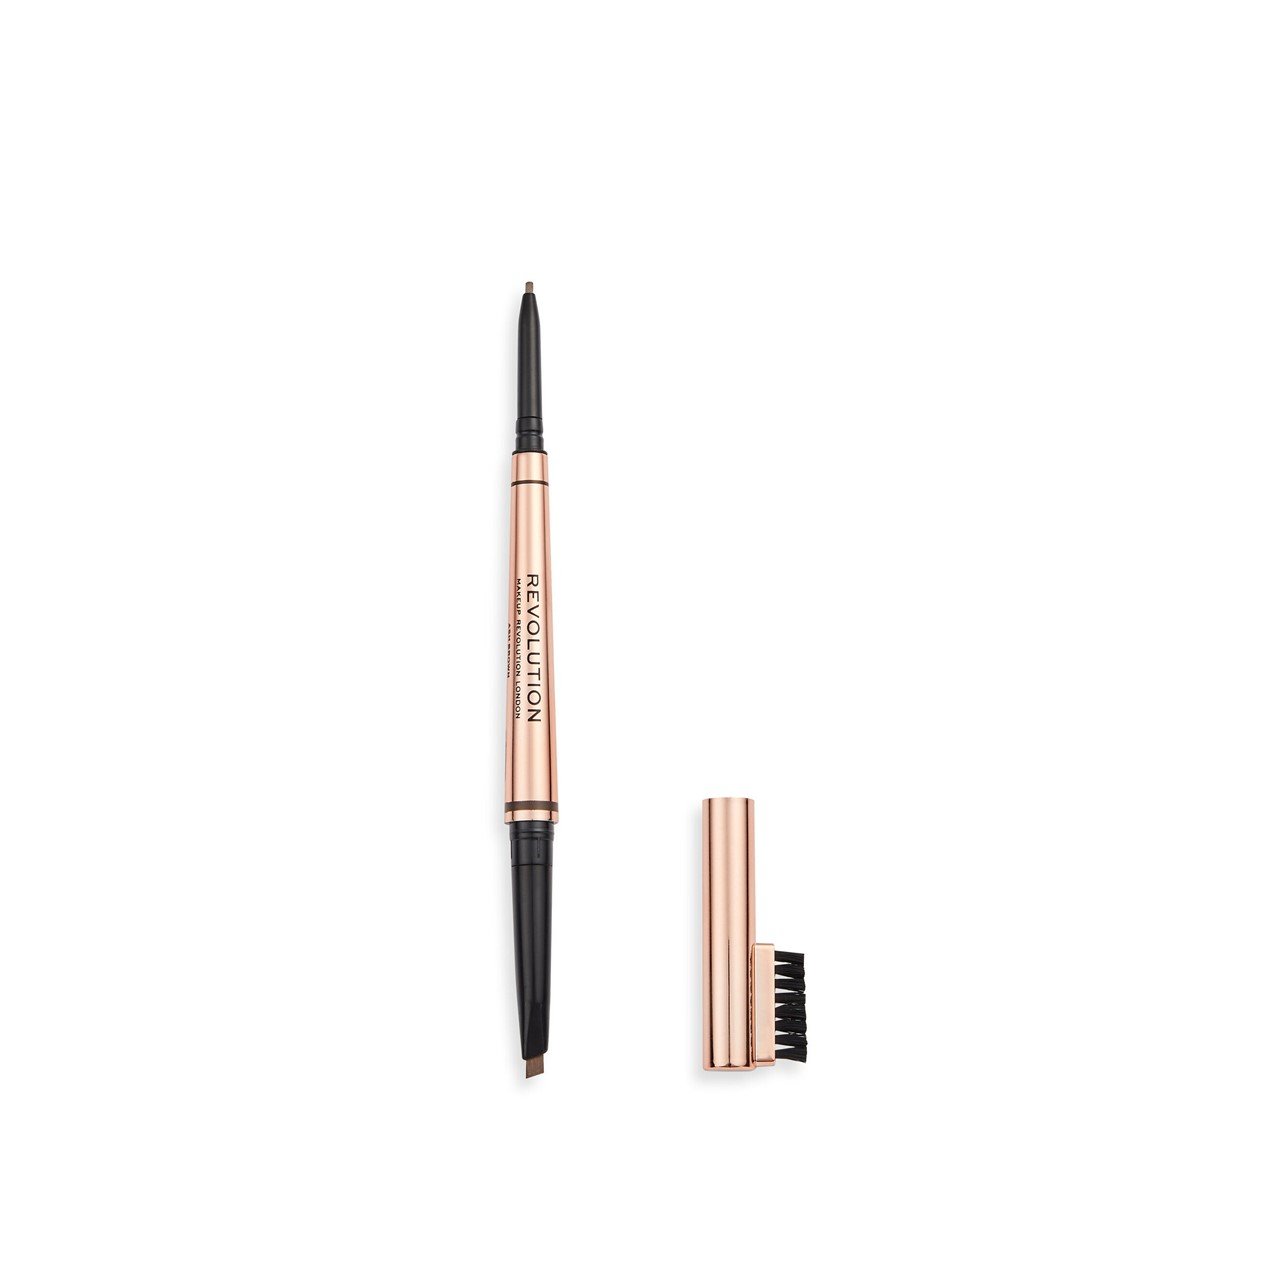 Makeup Revolution Balayage Duo Brow Pencil Ash Brown 0.38g